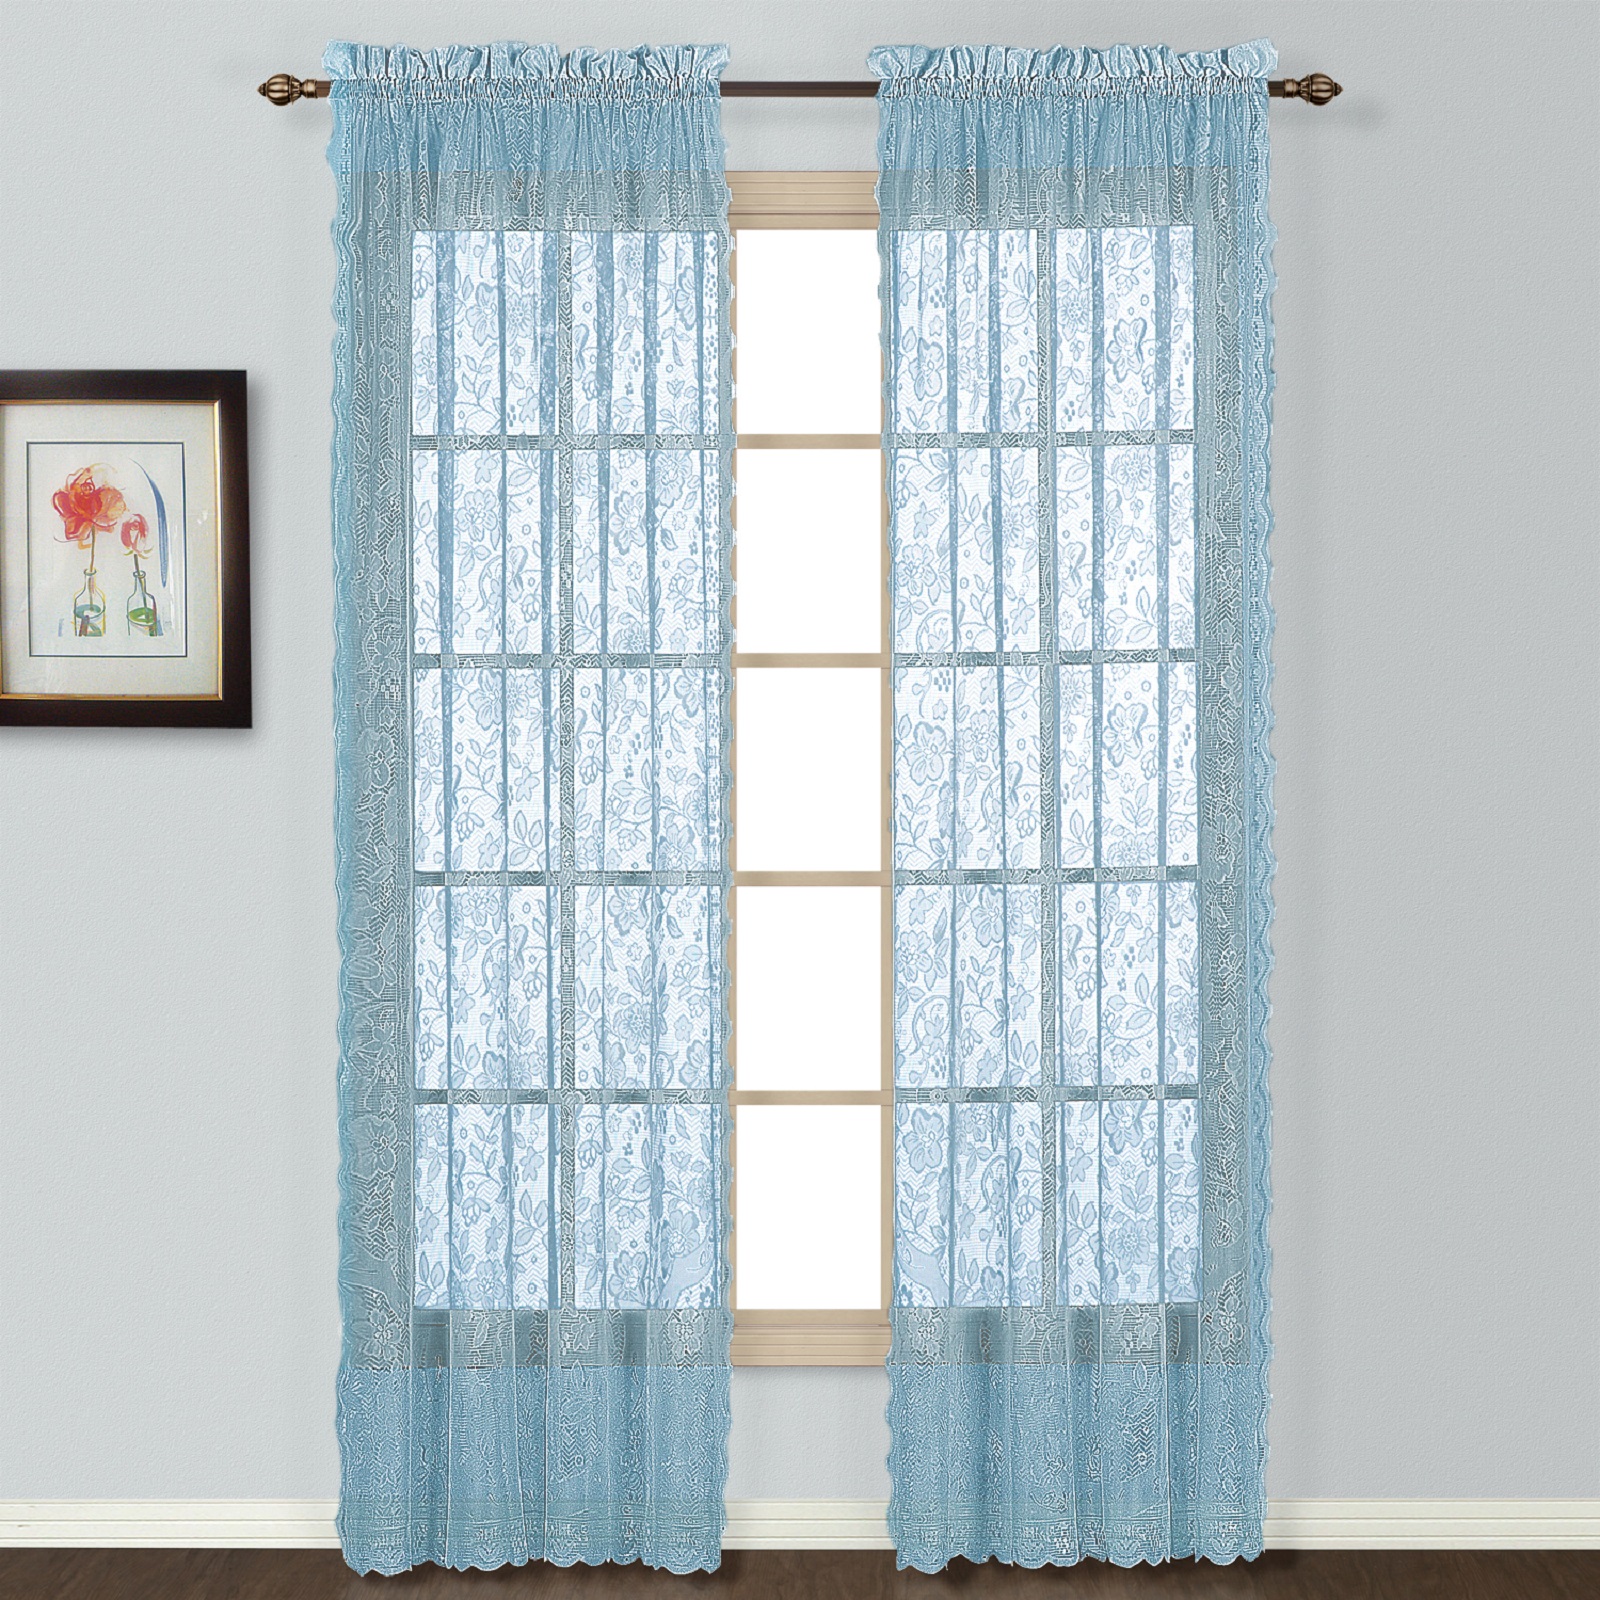 United Curtain Company Windsor 56" x 63" elegant lace window panel